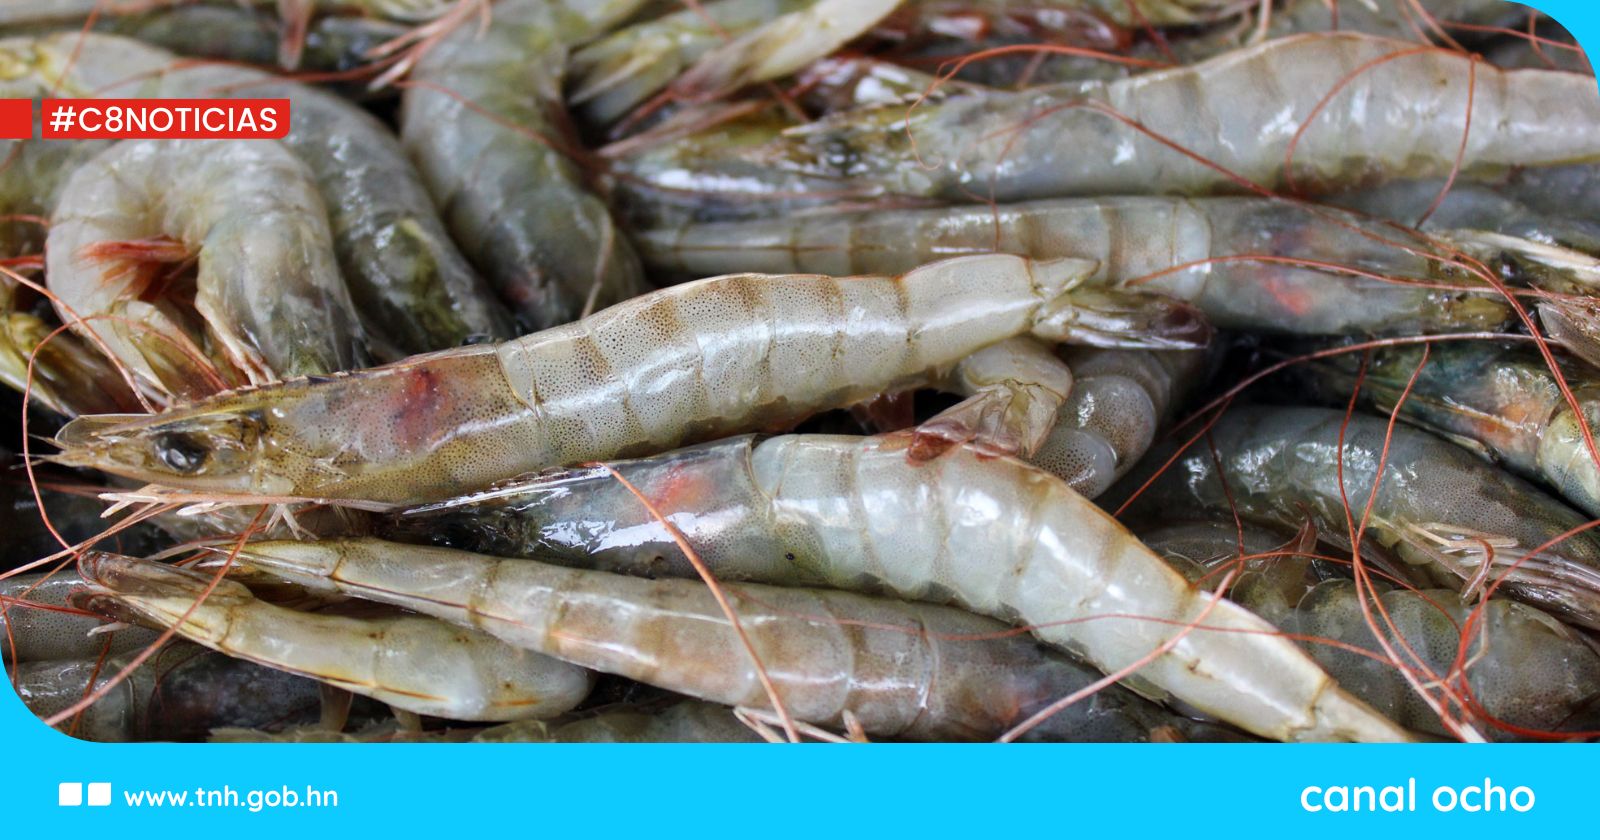 Dos contenedores de camarón hondureño van rumbo a China esta semana